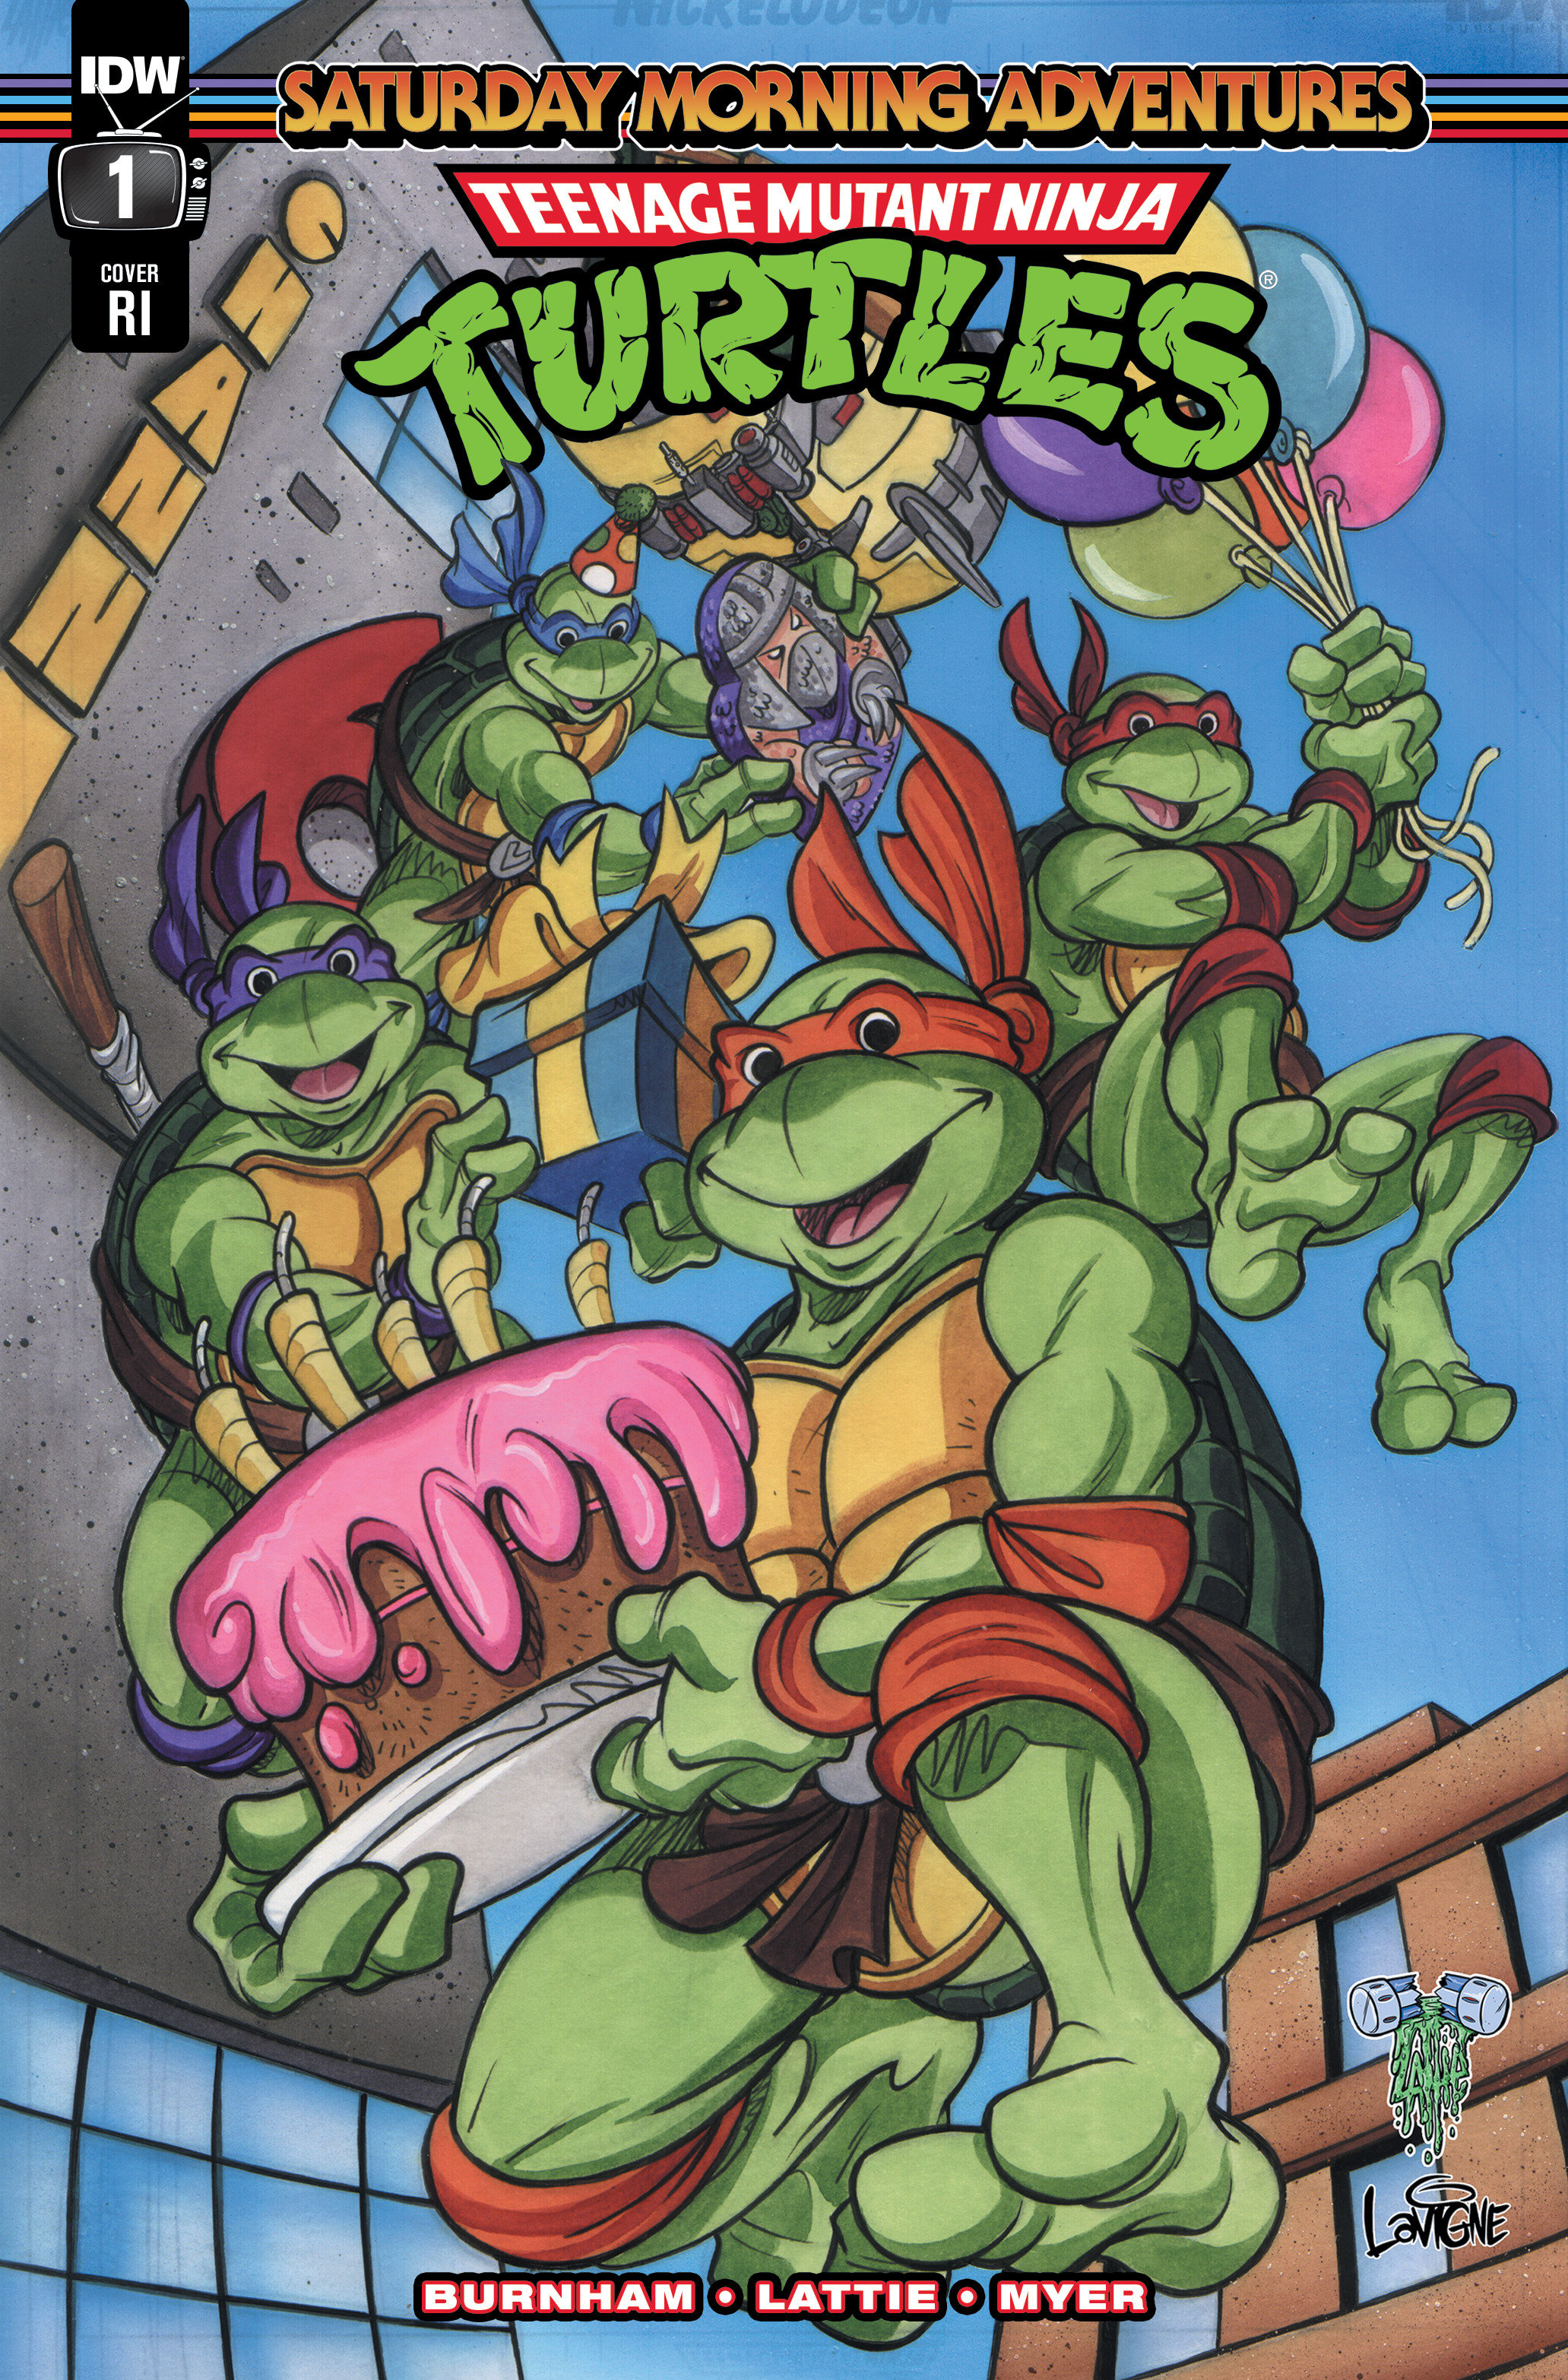 Teenage Mutant Ninja Turtles Saturday Morning Adventures #1 Cover Retailer Incentive 1 for 10 Incentive